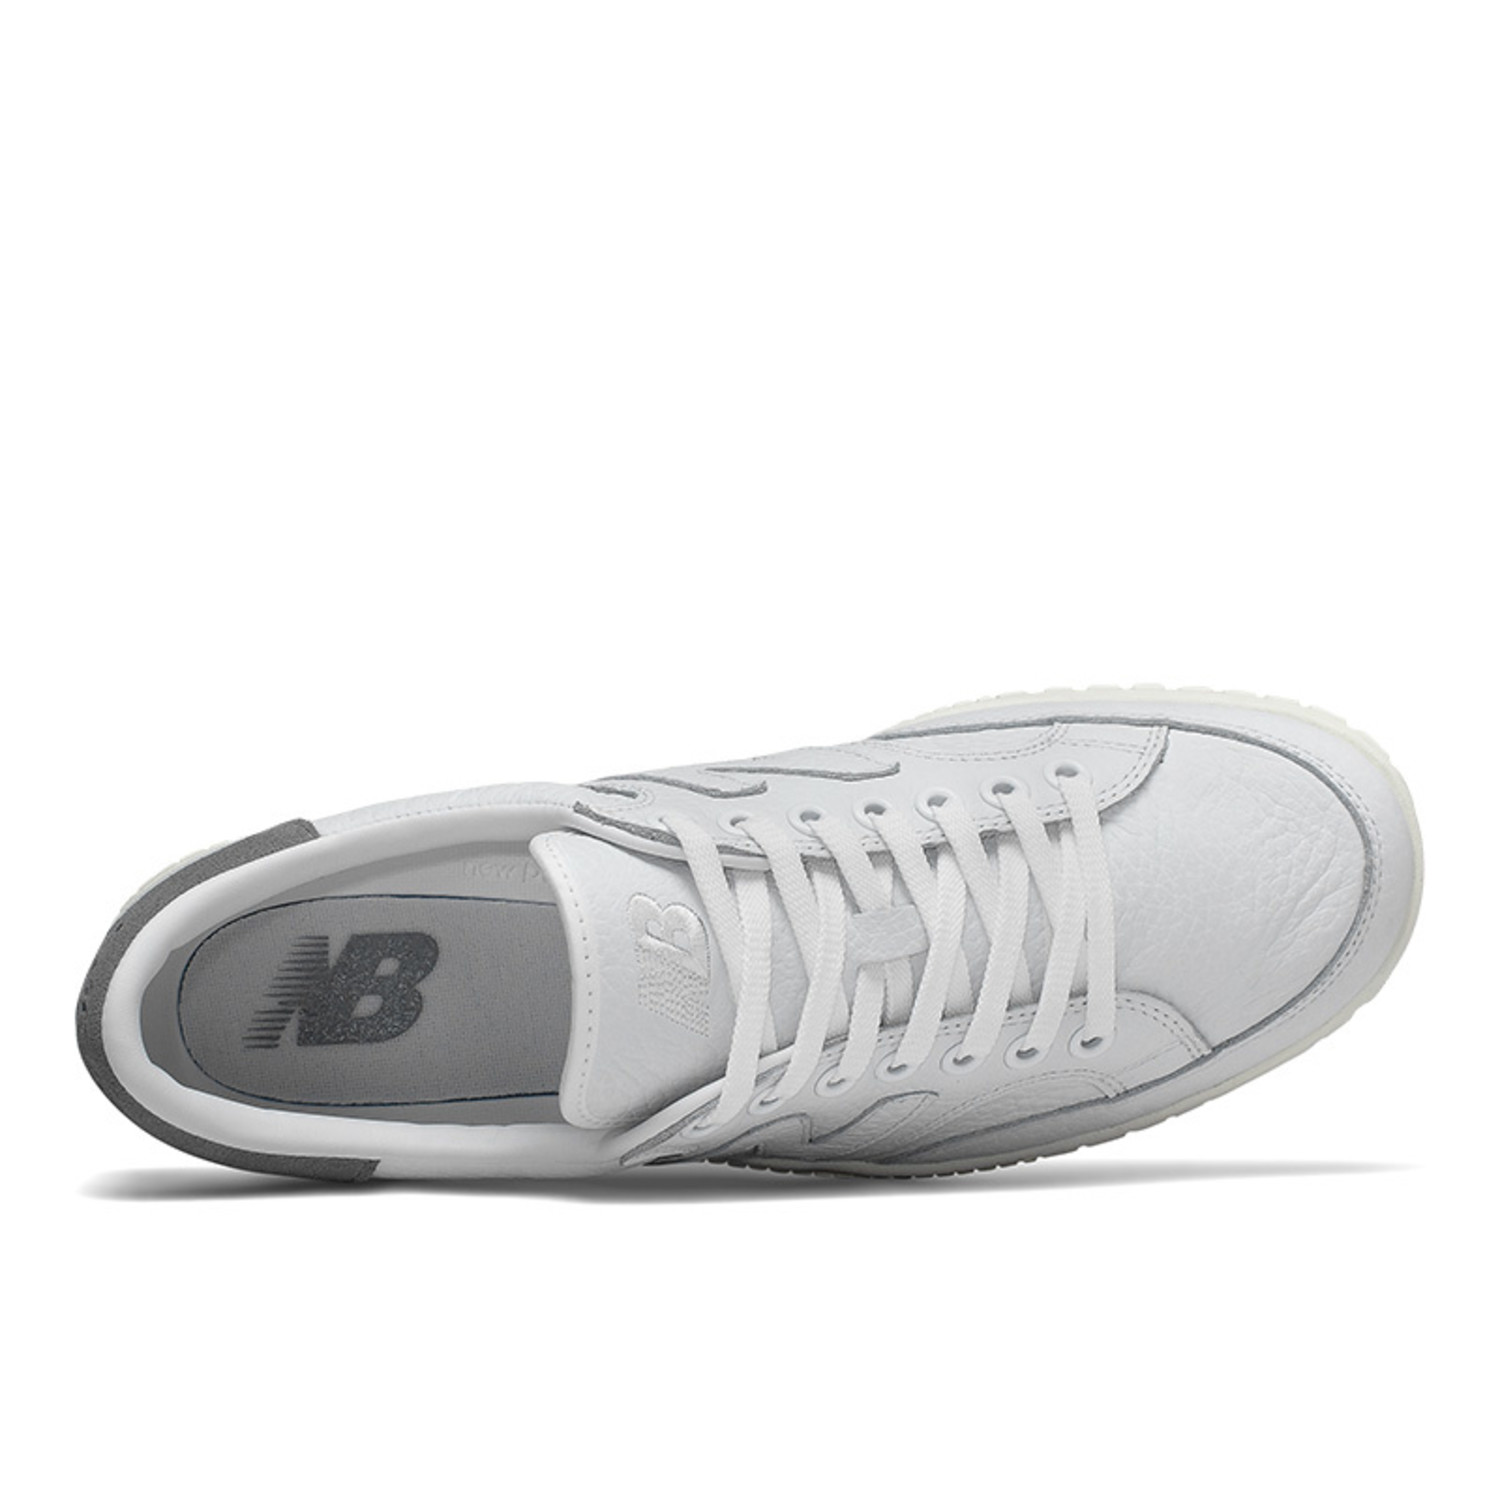 New CT400 White - Men's Shoes Canada - Kiddie Kobbler St Laurent